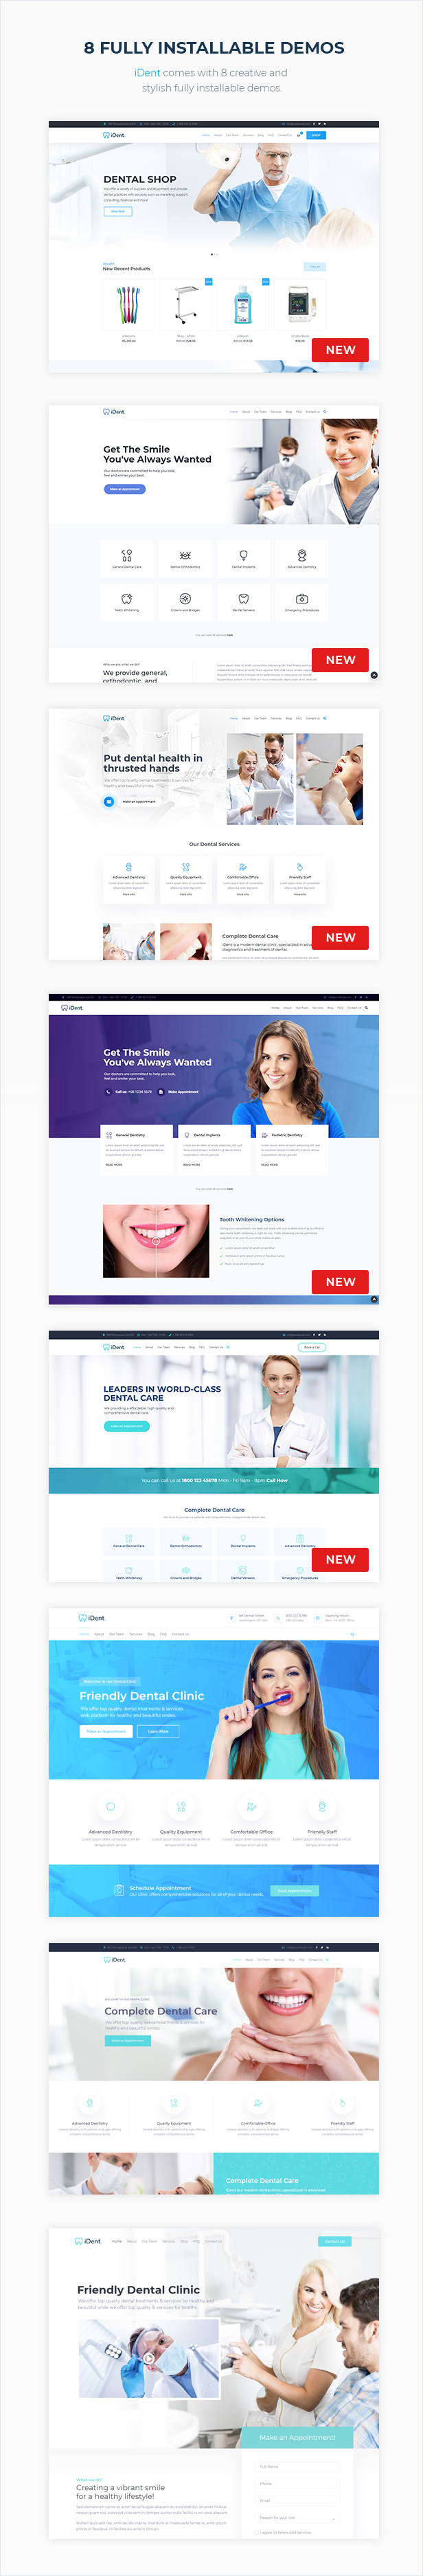 iDent - Dentist & Medical WordPress Theme - 2